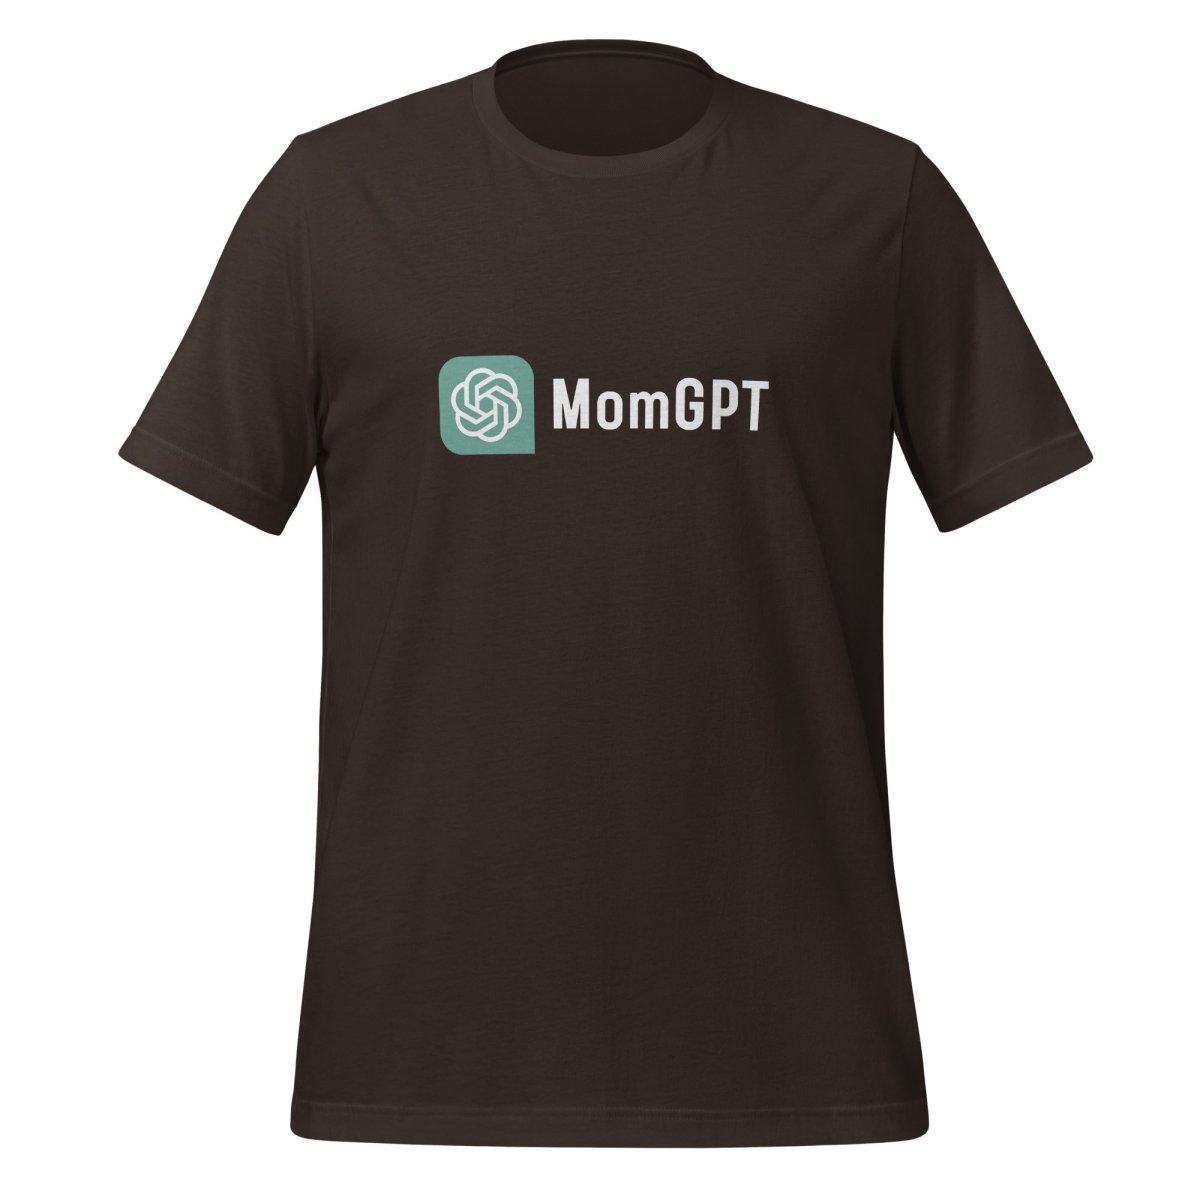 MomGPT T - Shirt (unisex) - Brown - AI Store